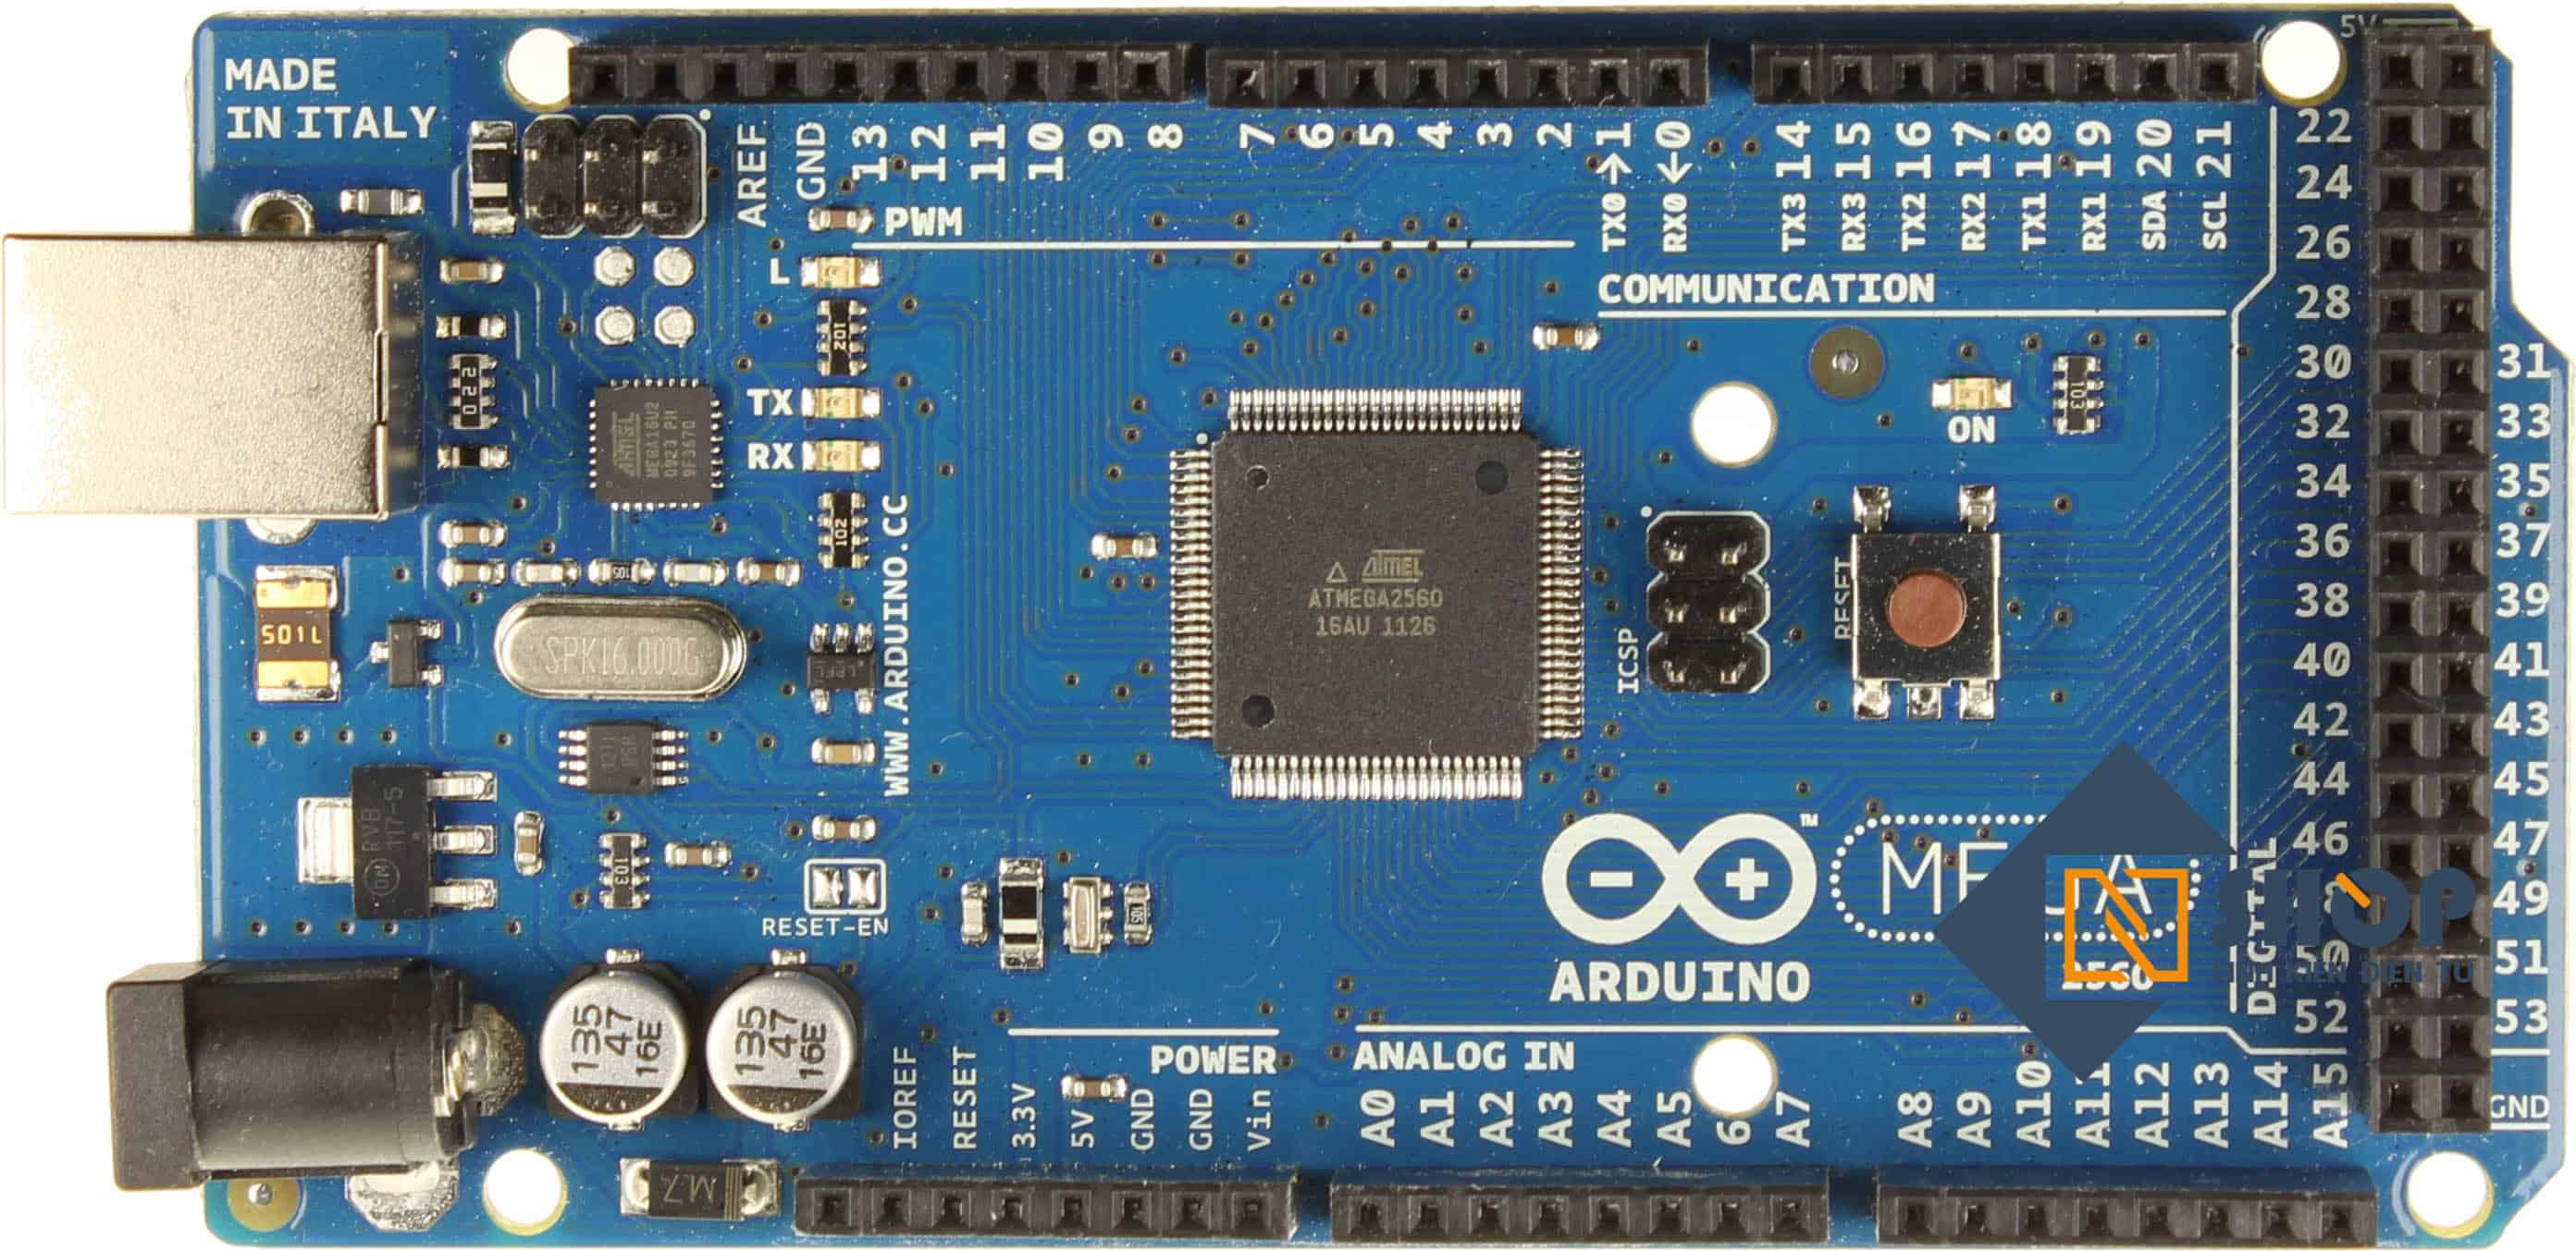 arduino mega 2560 pins compared to r3